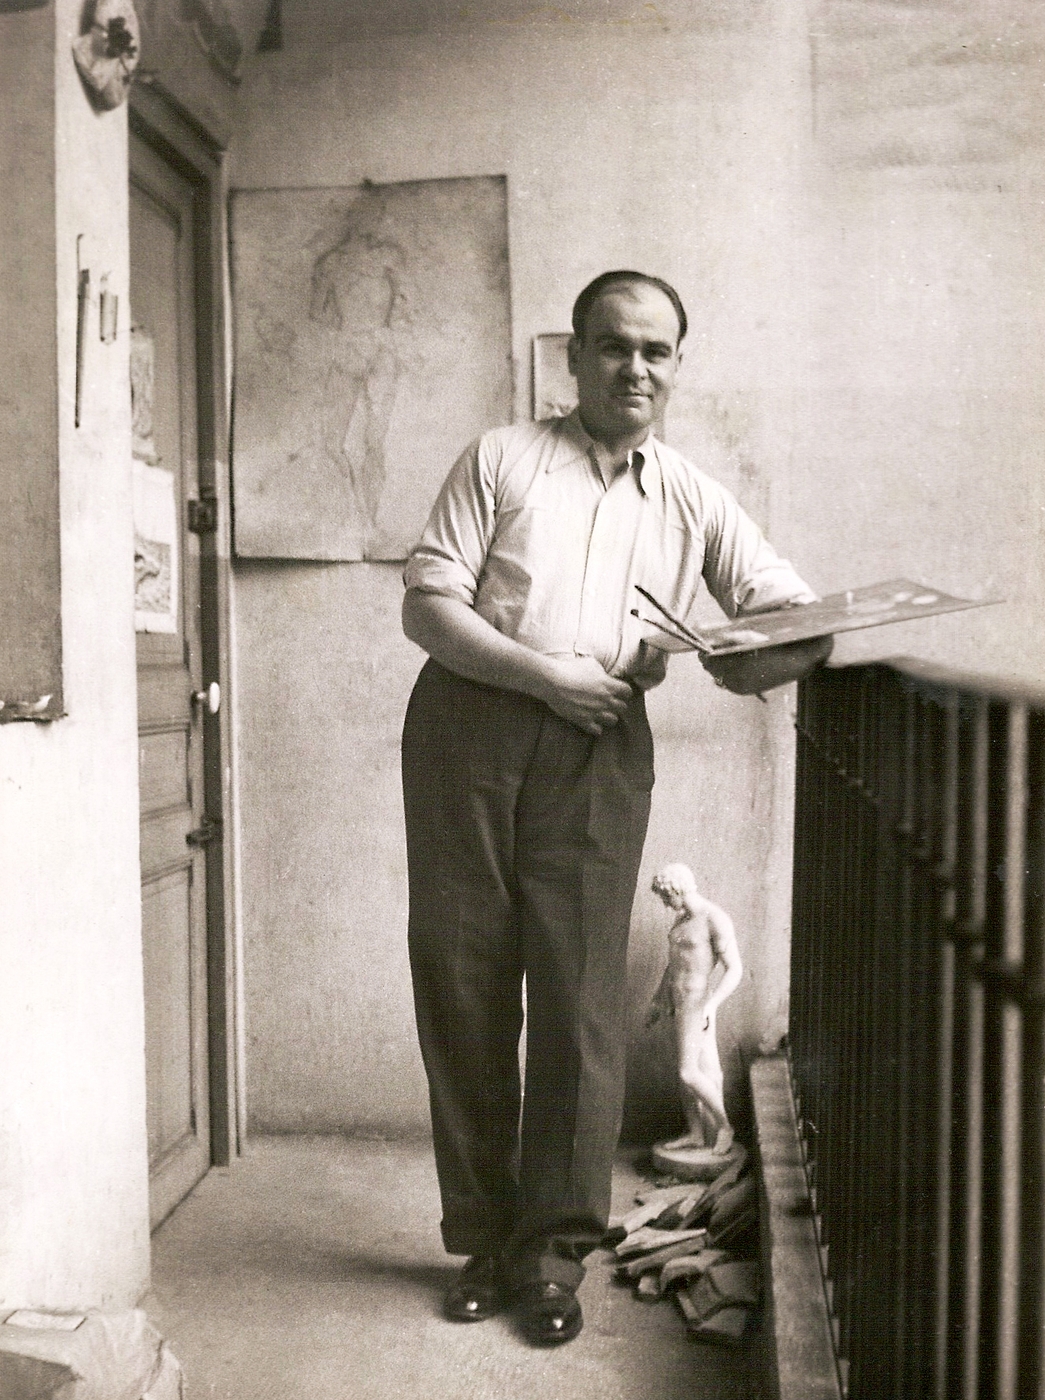 Archive of Filippo de Pisis, Filippo de Pisis
In the studio in Paris in 1932